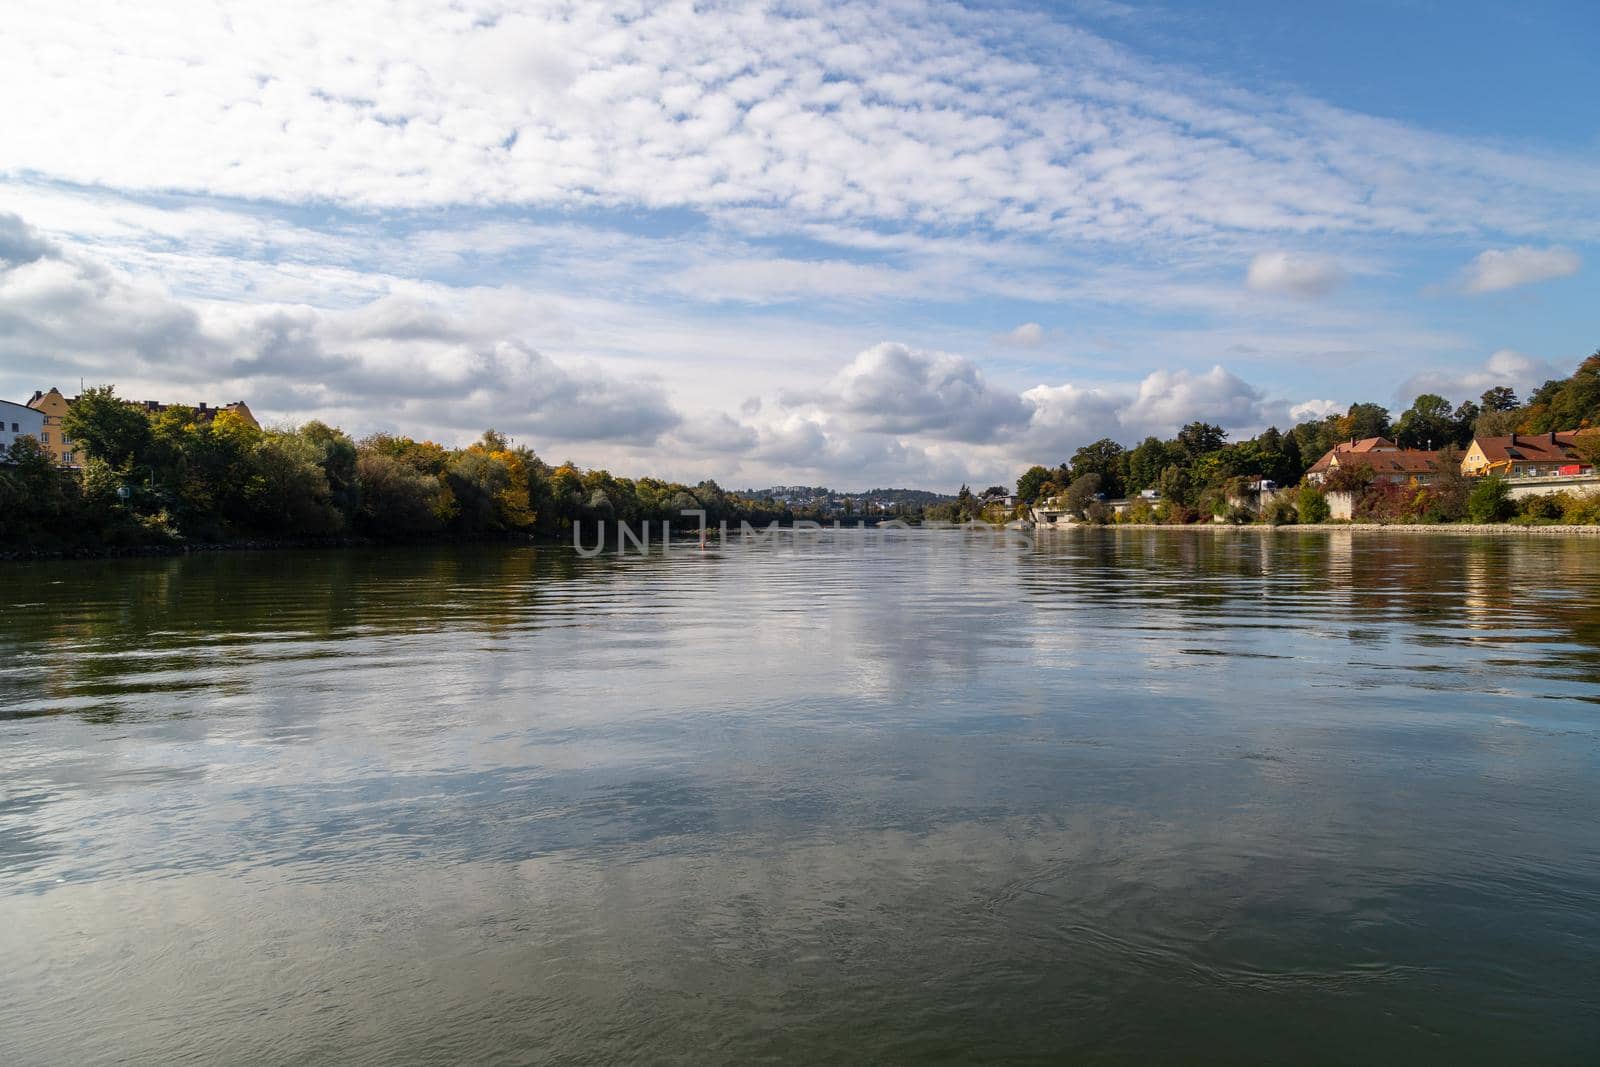 Danube river in Passau, Bavaria, Germany in autumn by reinerc